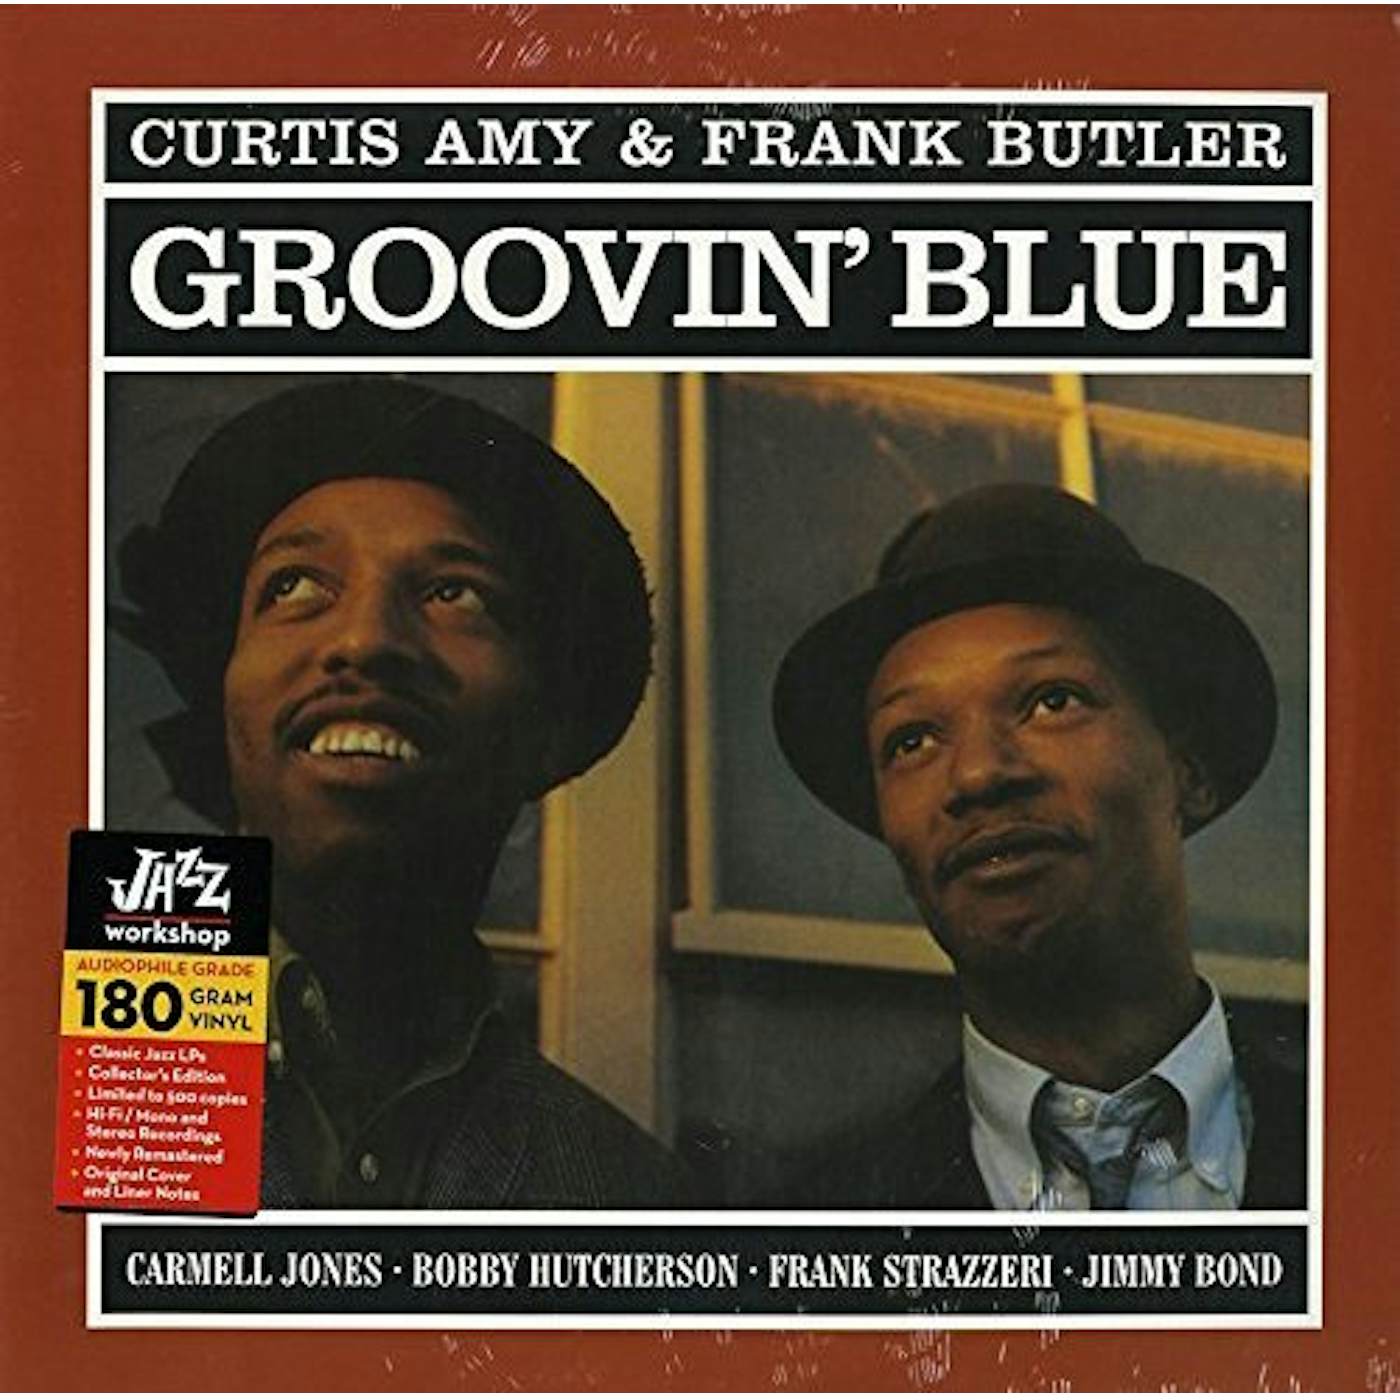 Curtis Amy & Frank Butler GROOVIN BLUE Vinyl Record